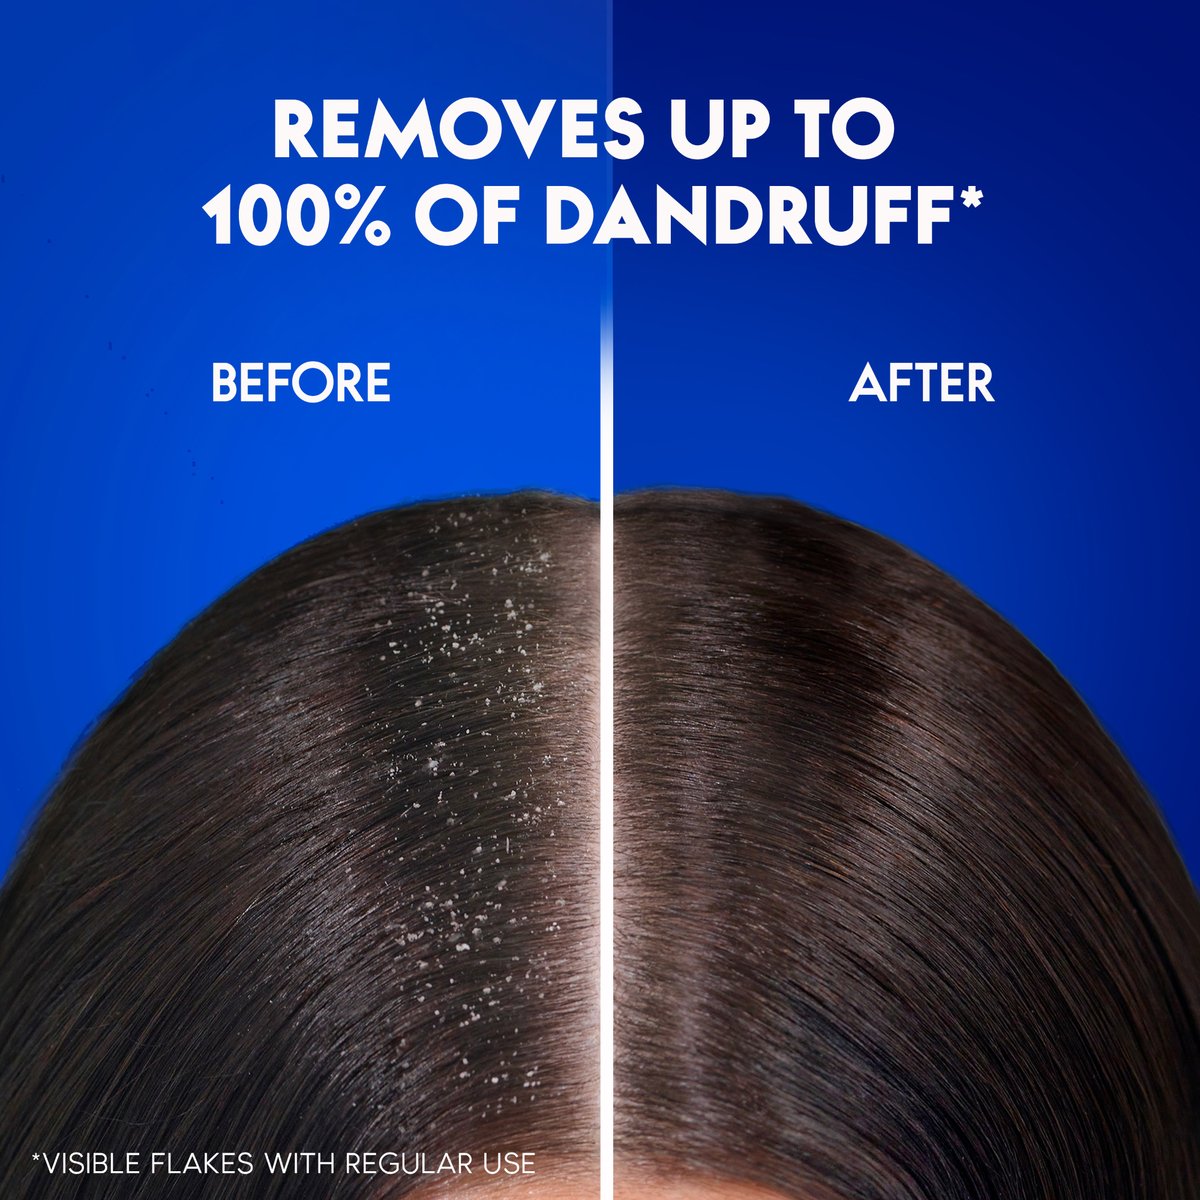 Head & Shoulders Dry Scalp Care Anti-Dandruff Shampoo with Almond Oil, 600 ml